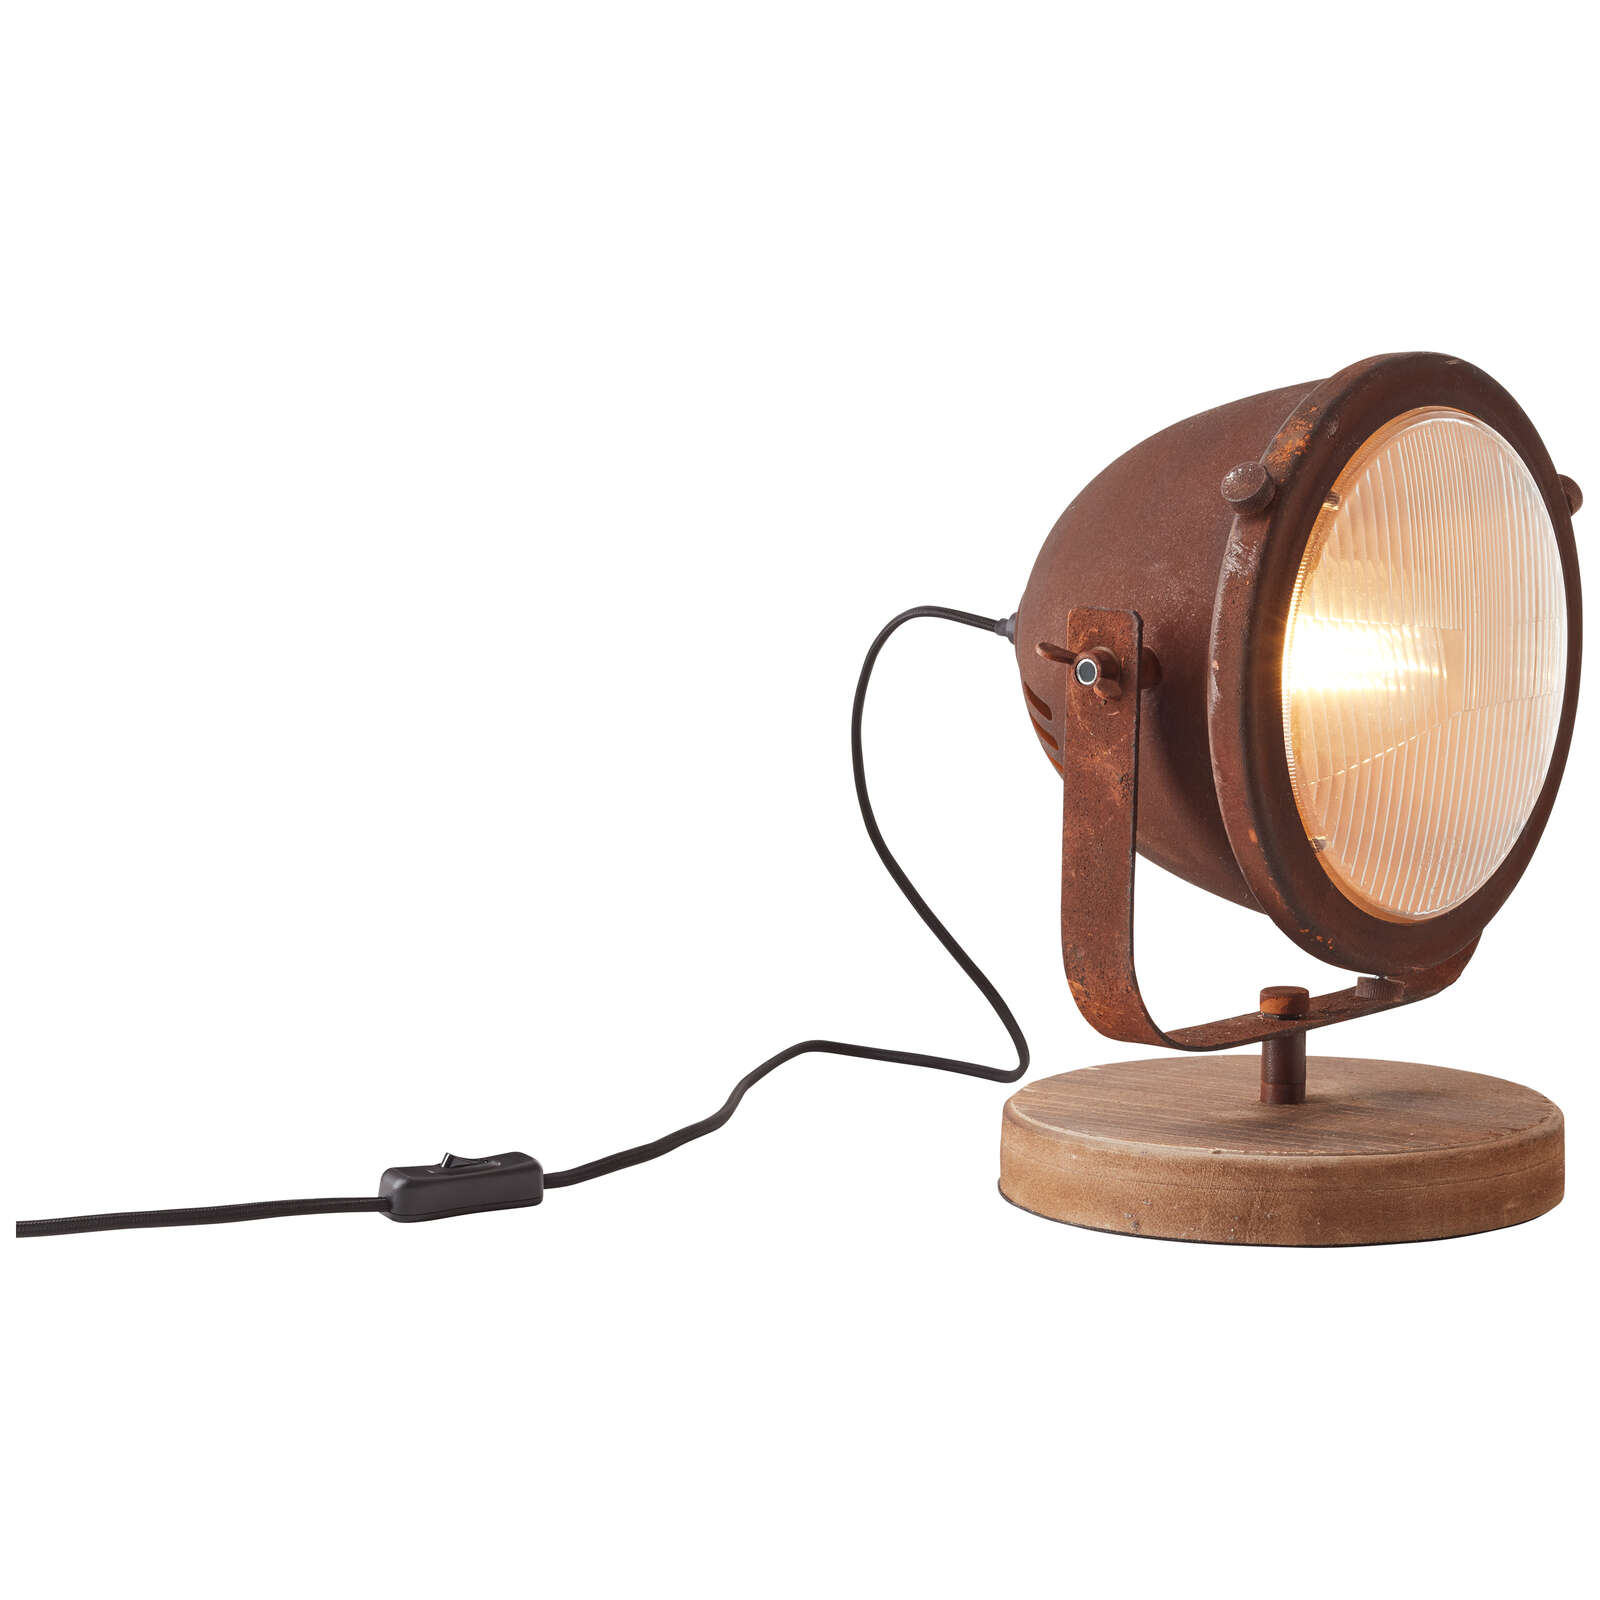             Wooden table lamp - Dilara 1 - Brown
        